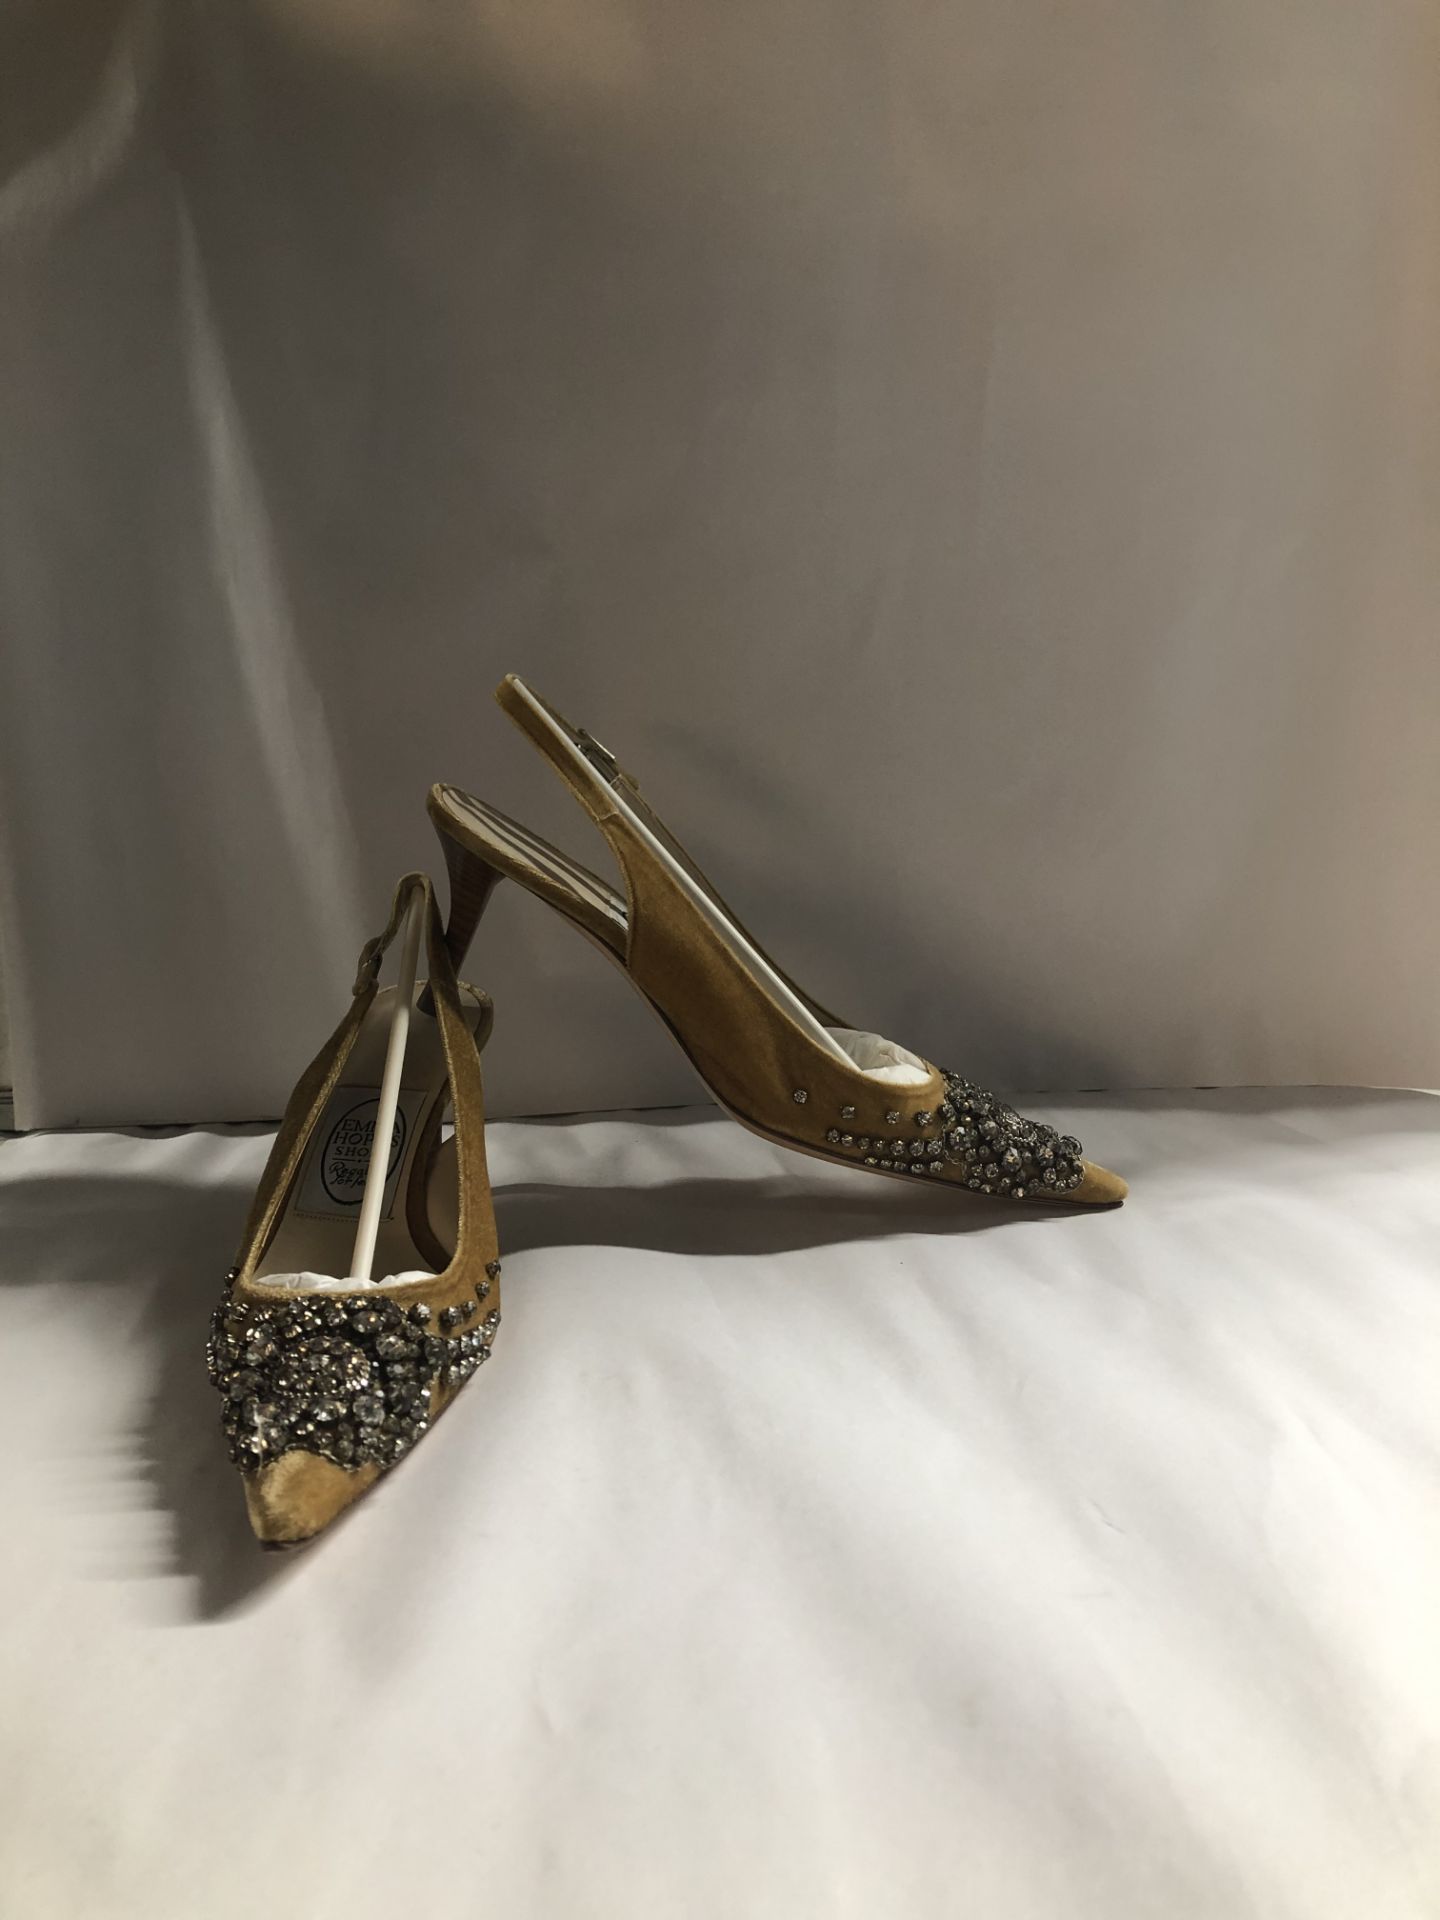 Emma Hope's Shoes Gold Velvet Heels. EU 39 RRP £399.00